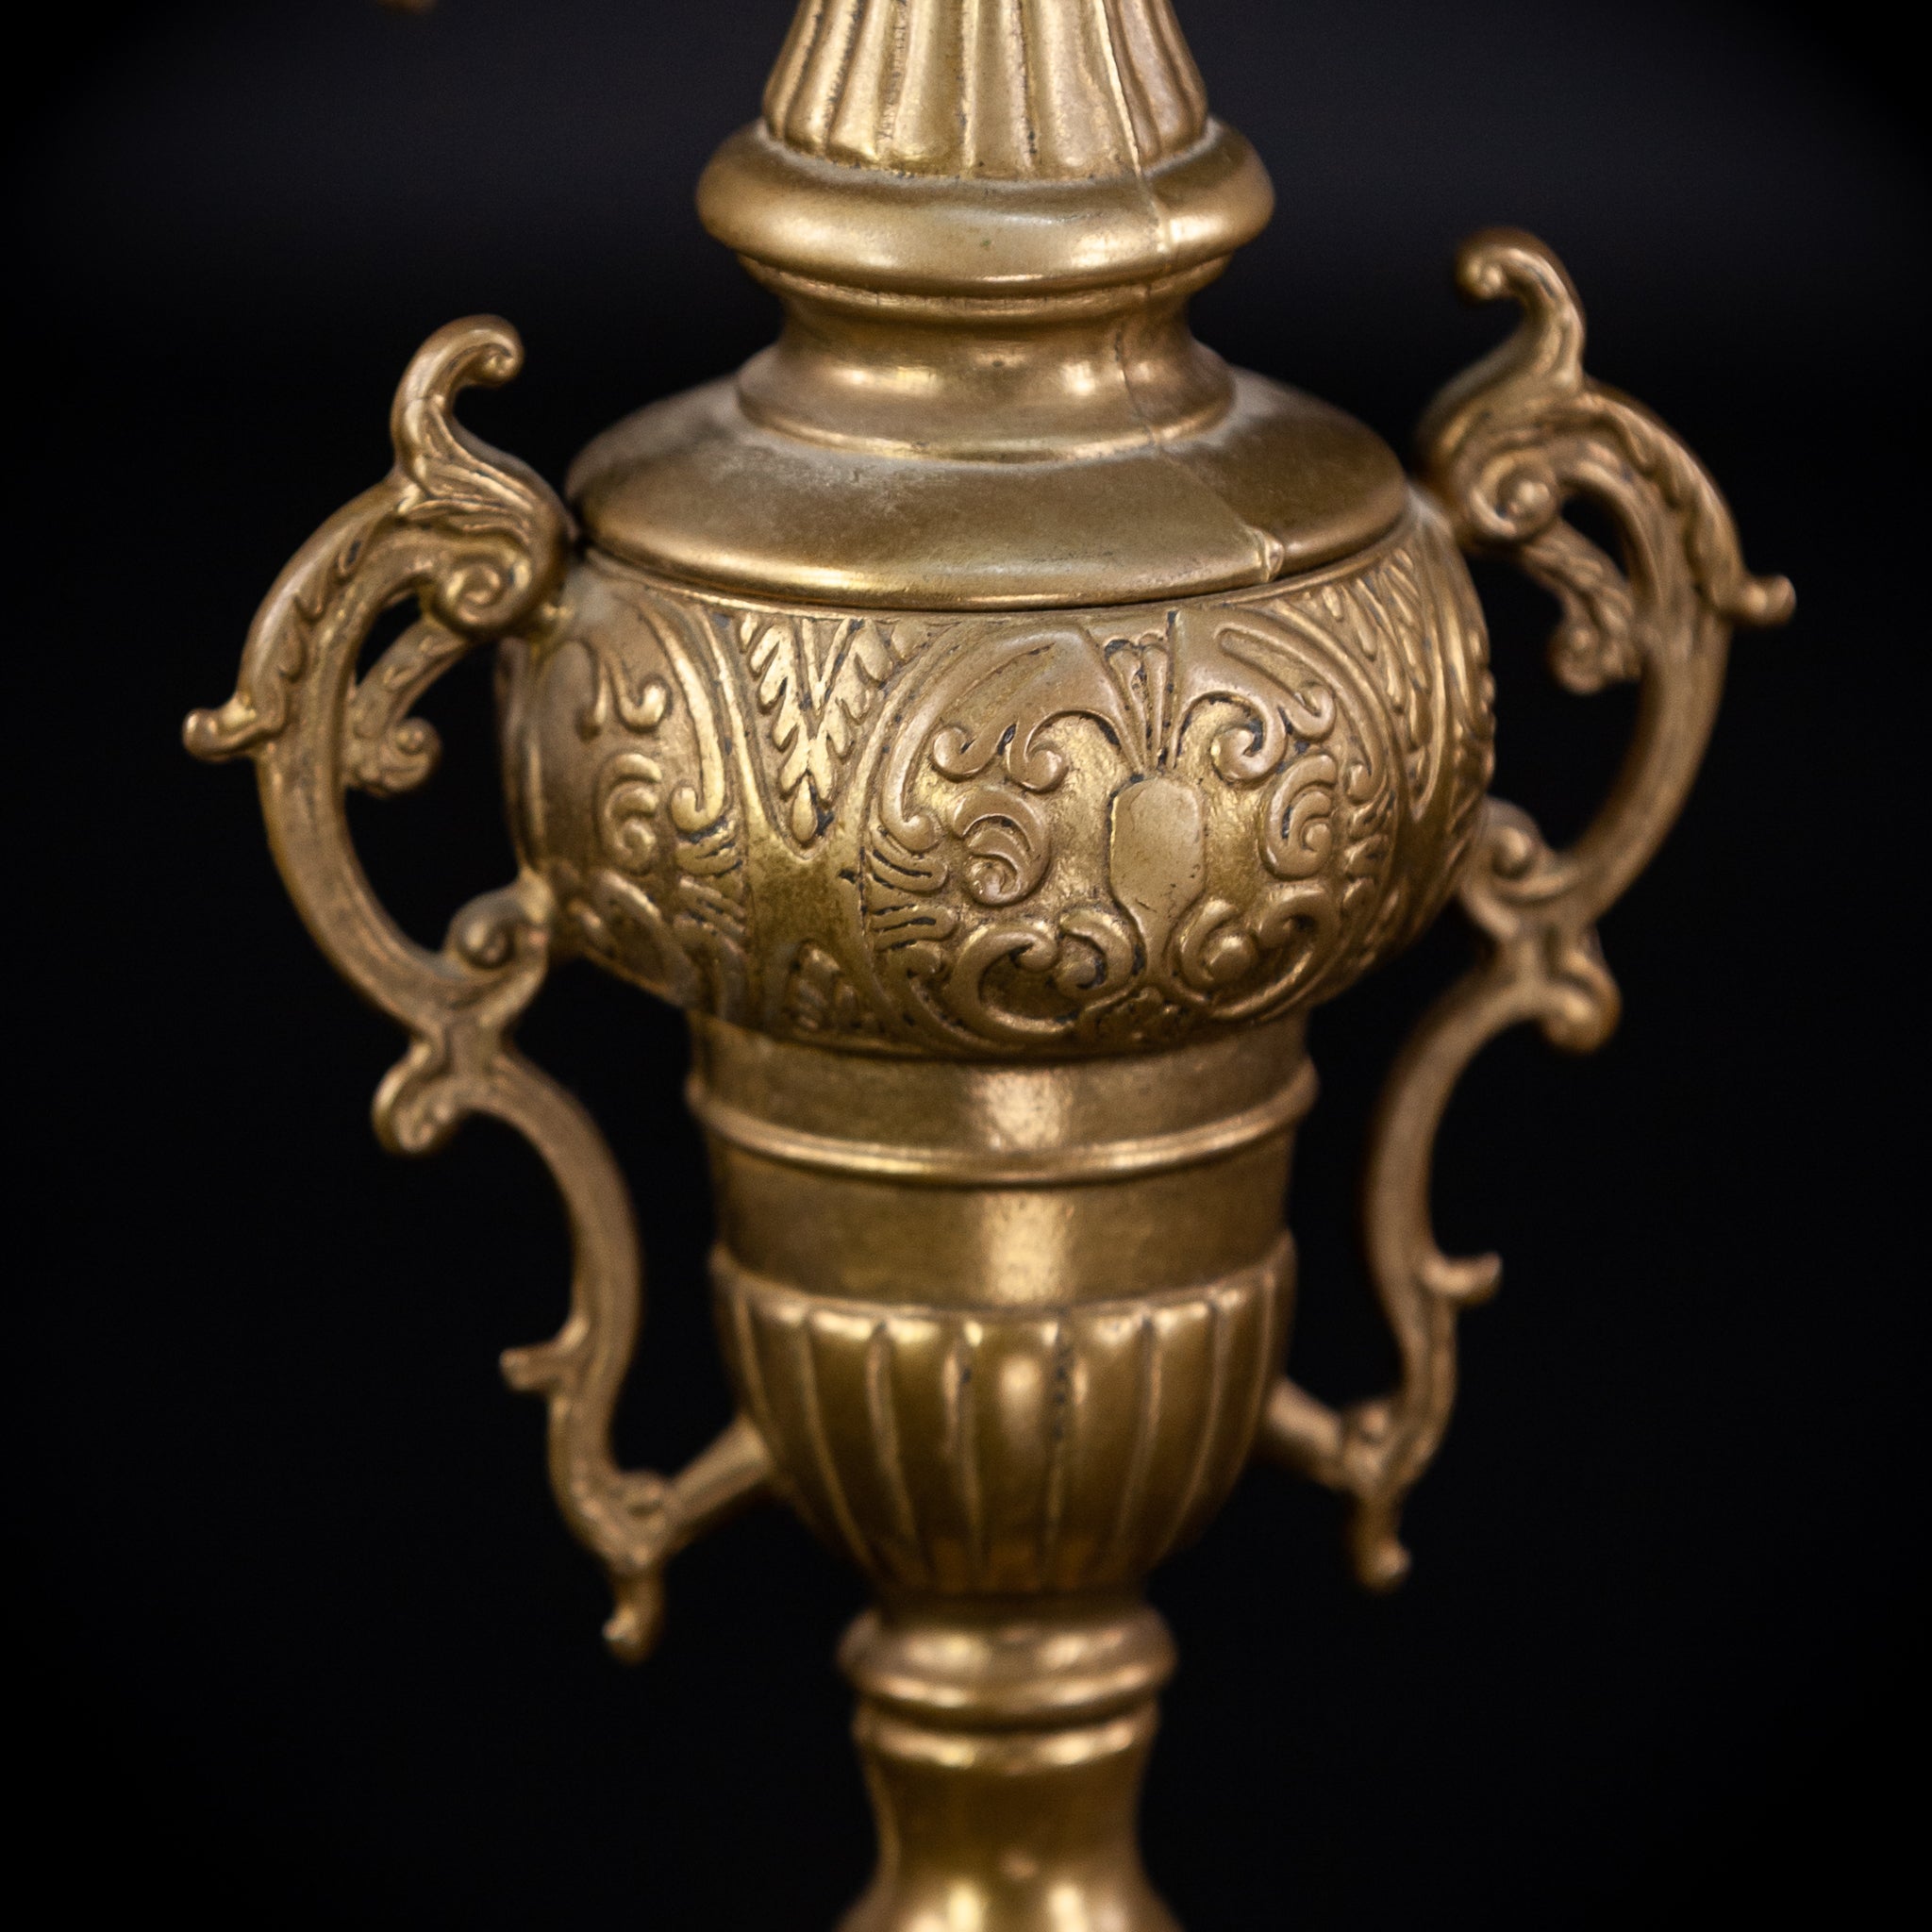 Pair of Baroque Bronze Candelabras | Vintage 16.1" / 41 cm